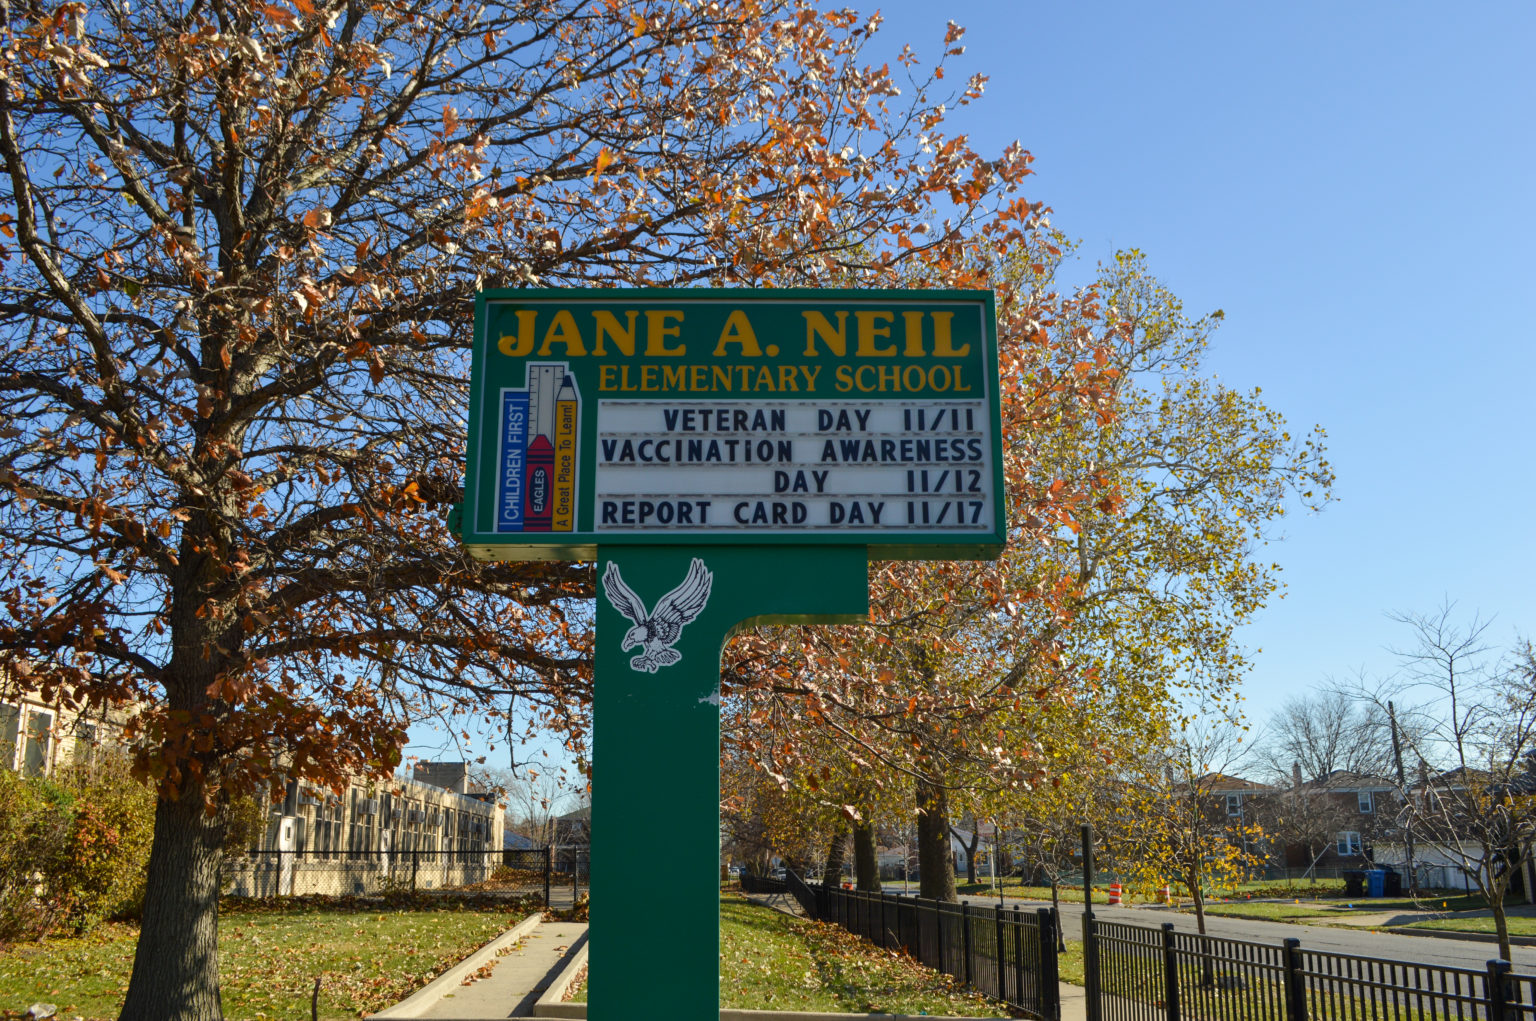 Jane A. Neil